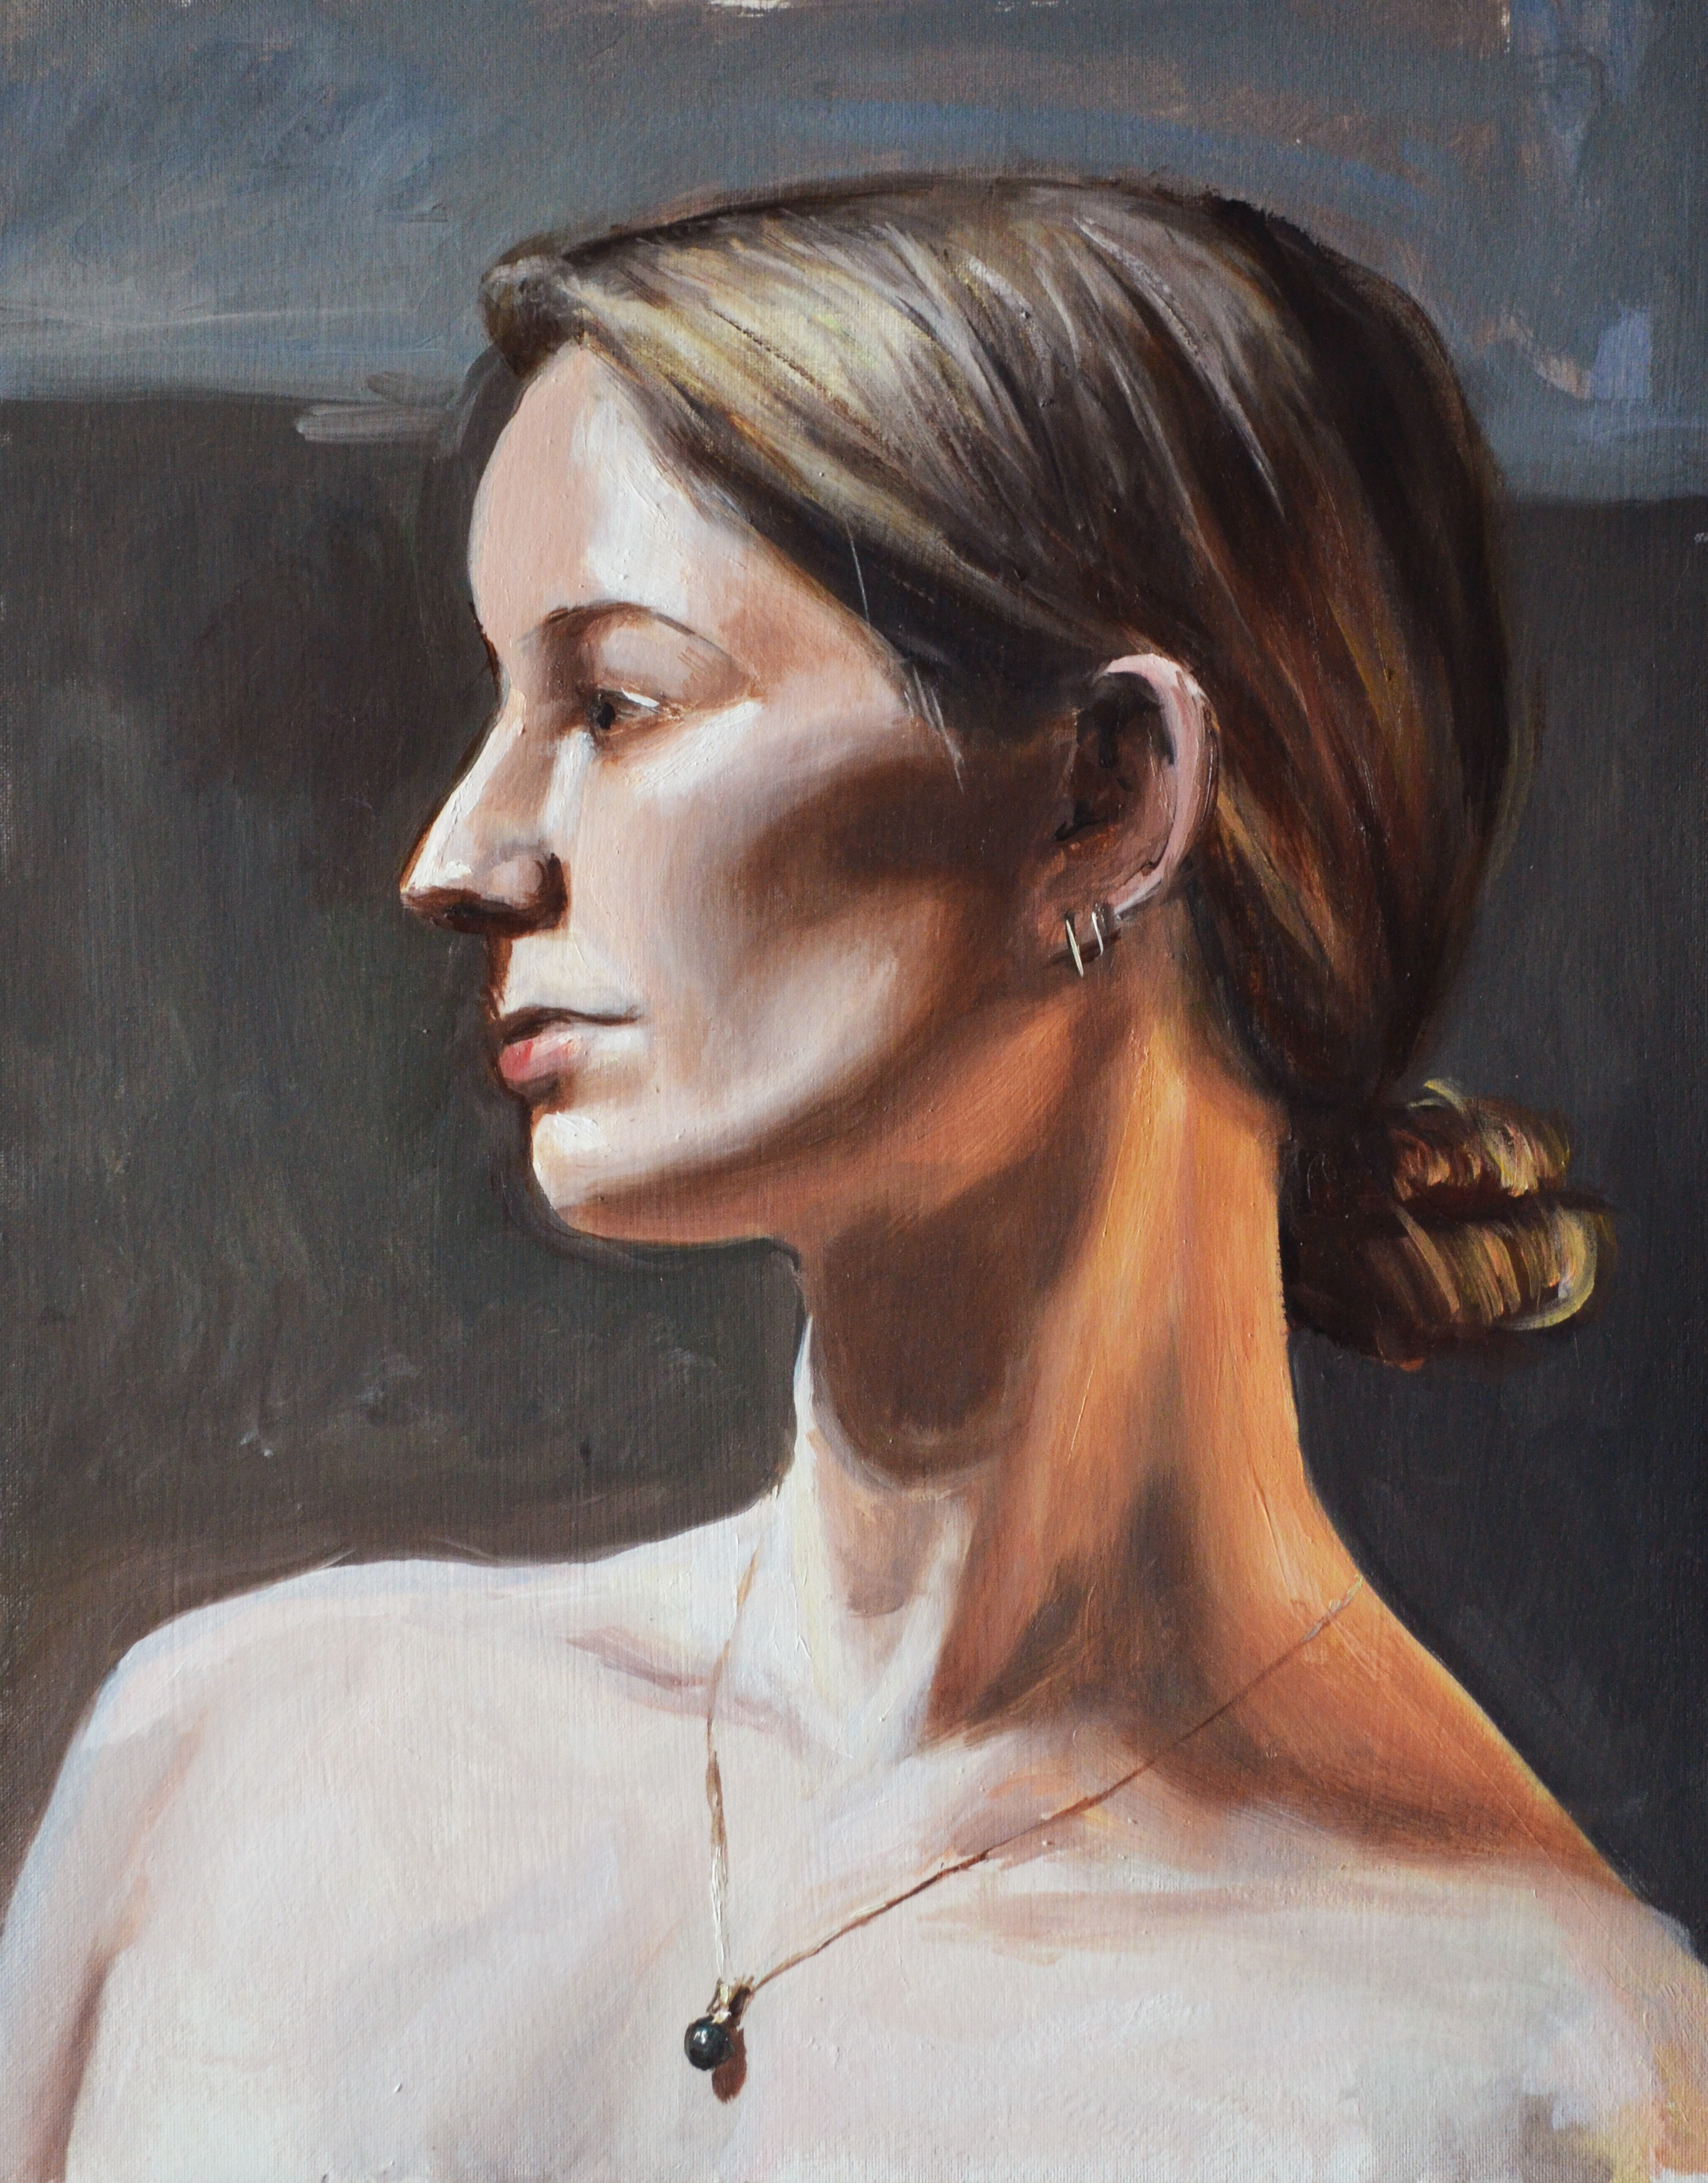 Megan, oil on canvas, 14" x 18", 2012.